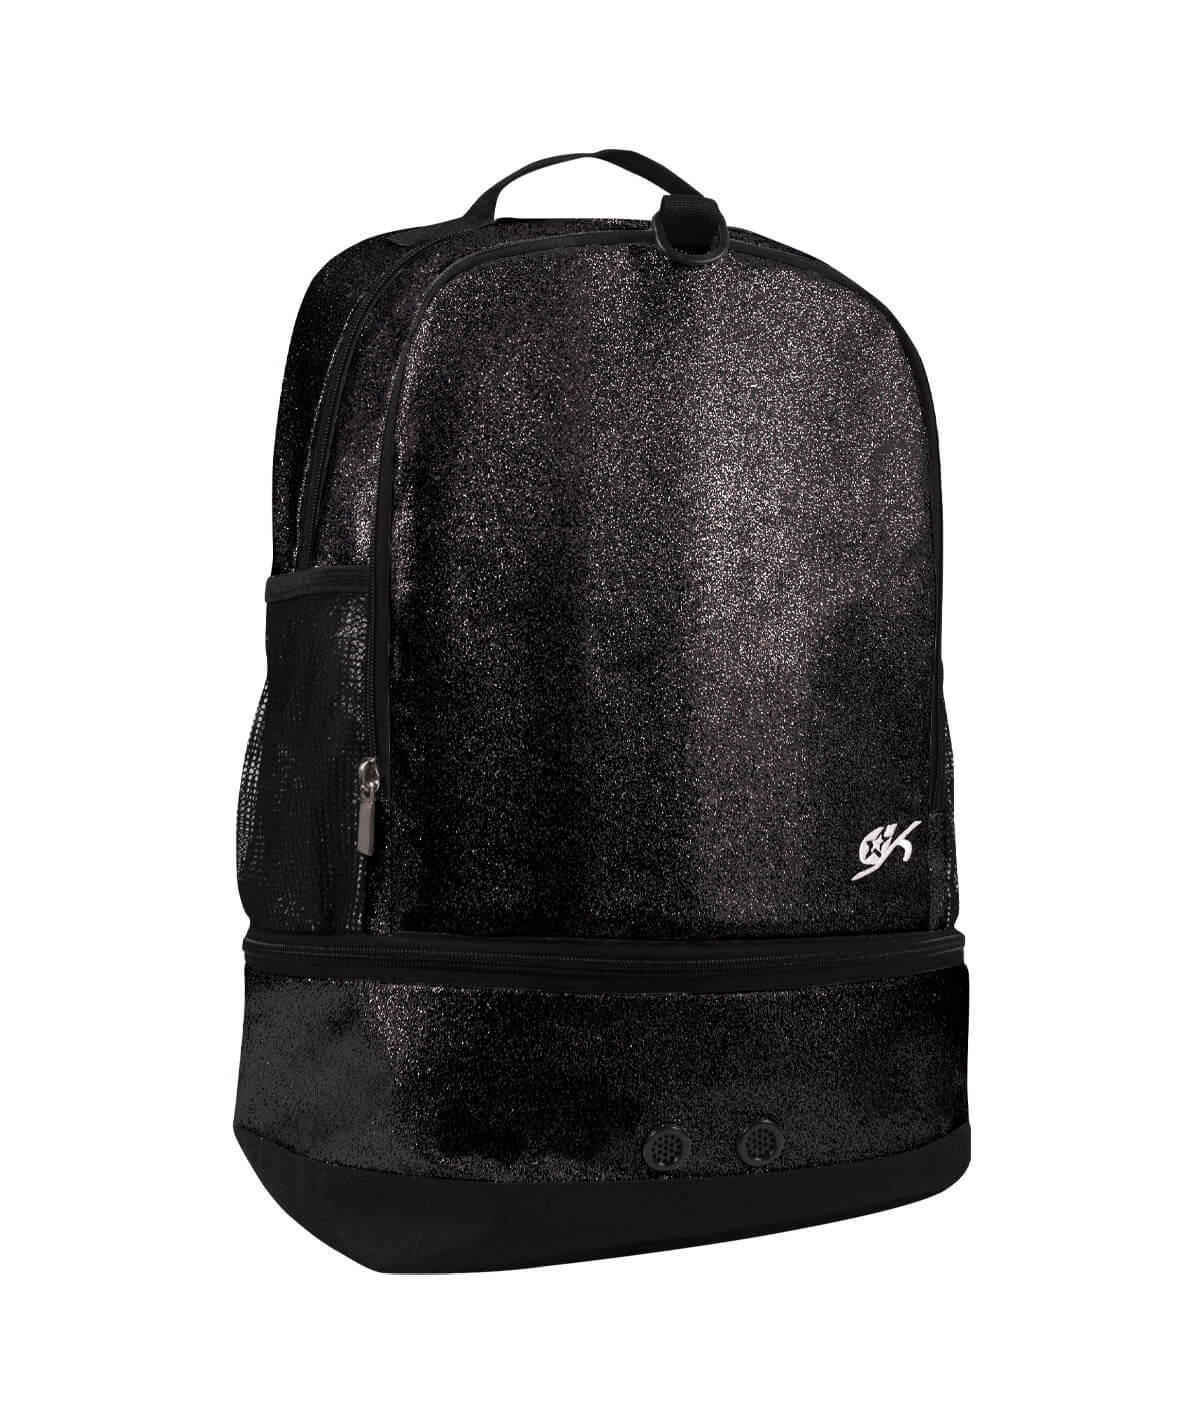 GK All Star Backpack - Cheer Bags | Omni Cheer